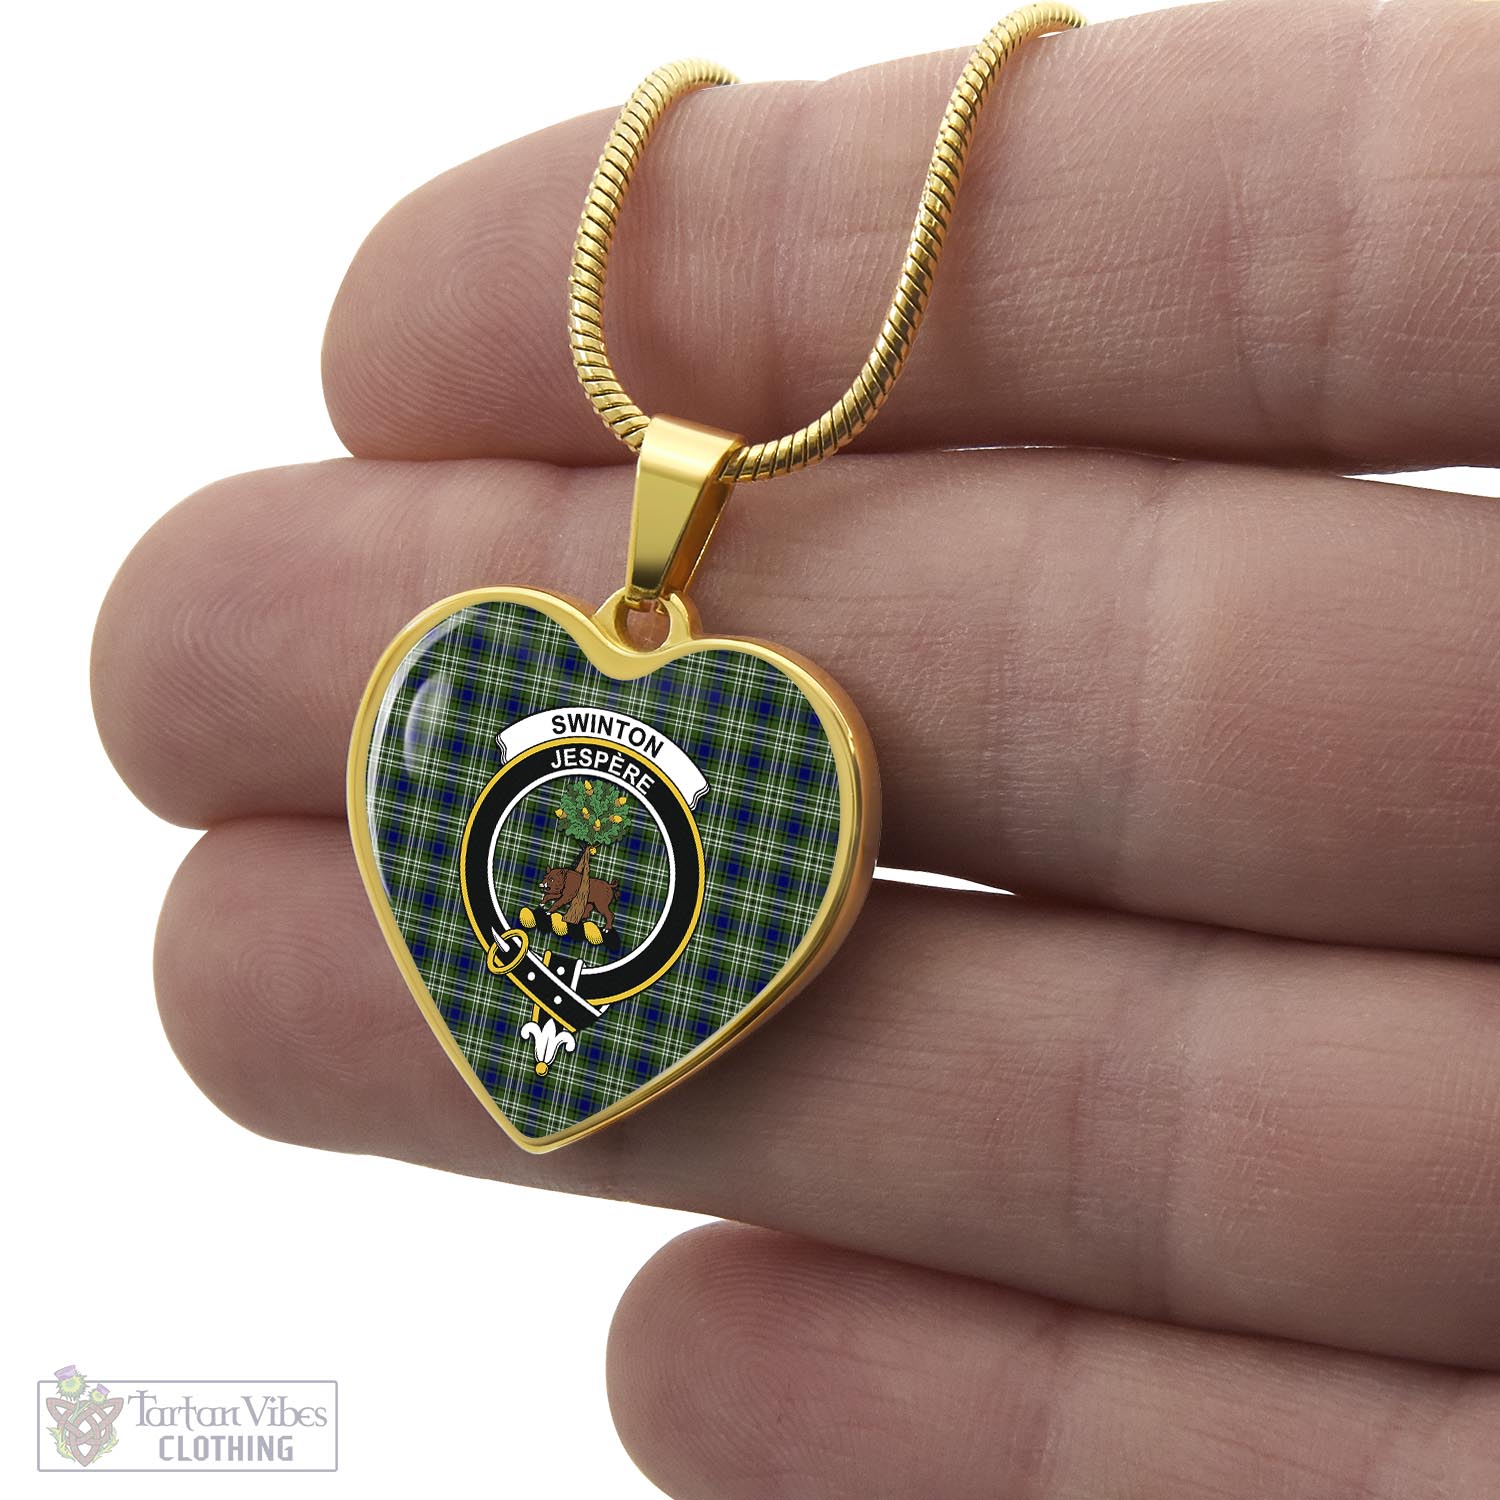 Tartan Vibes Clothing Swinton Tartan Heart Necklace with Family Crest